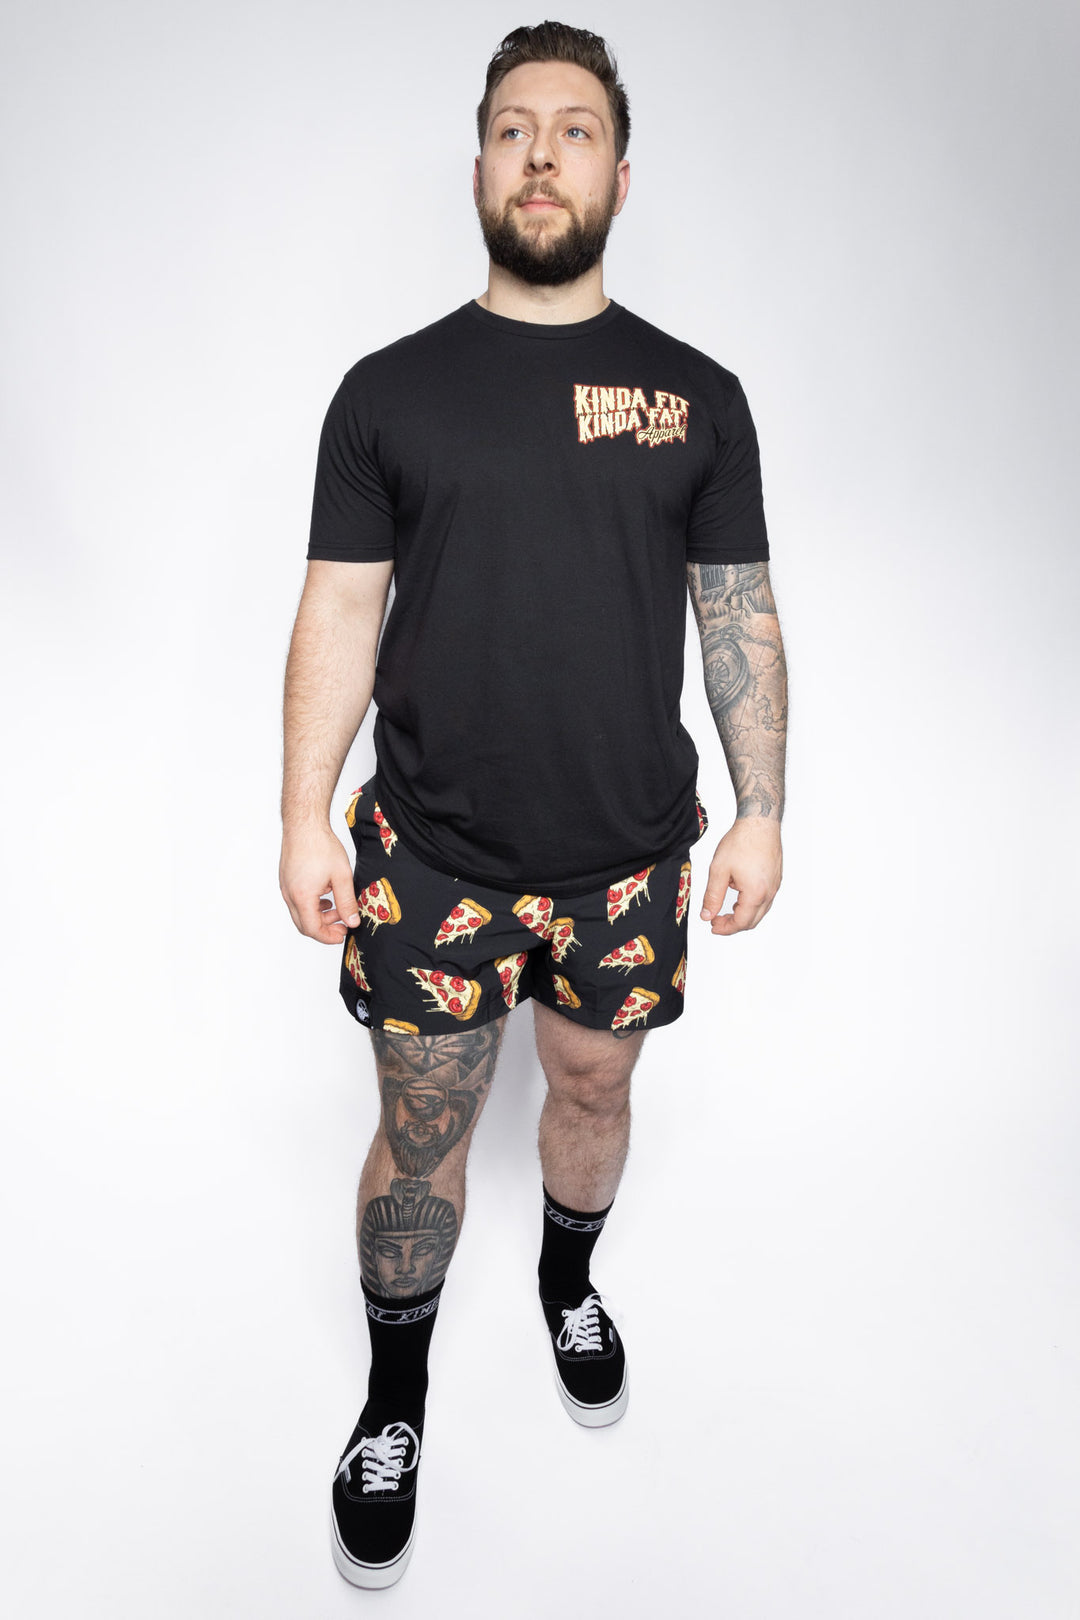 Zack wearing black Plateroni Pizza Training Shorts in size large